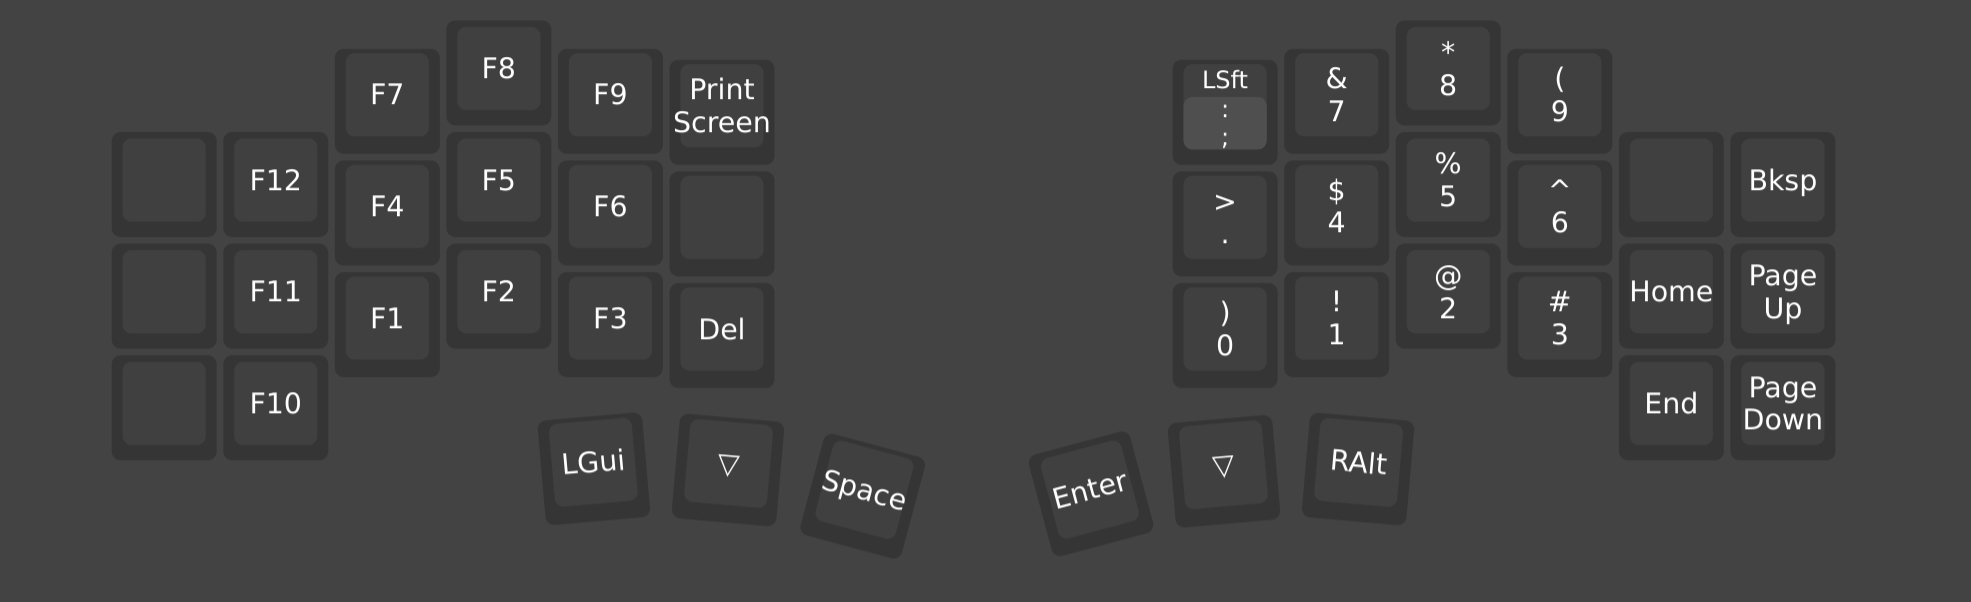 keyboard layout layer one